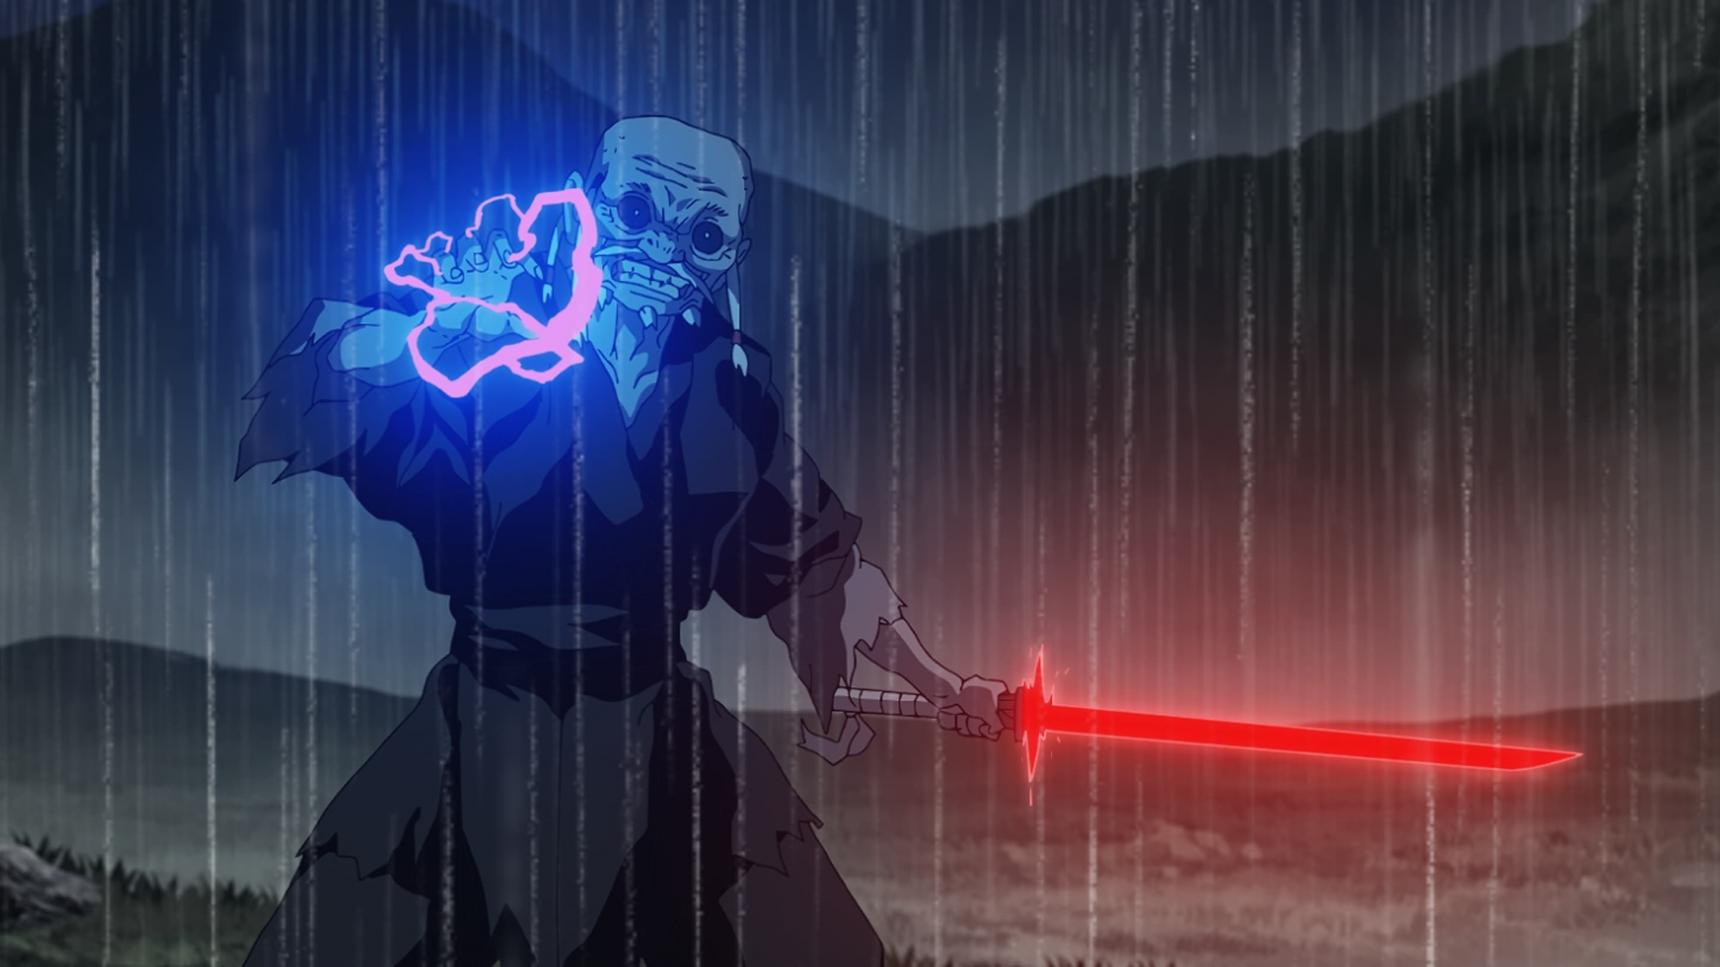 Poster del episodio 7 de Star Wars: Visions online